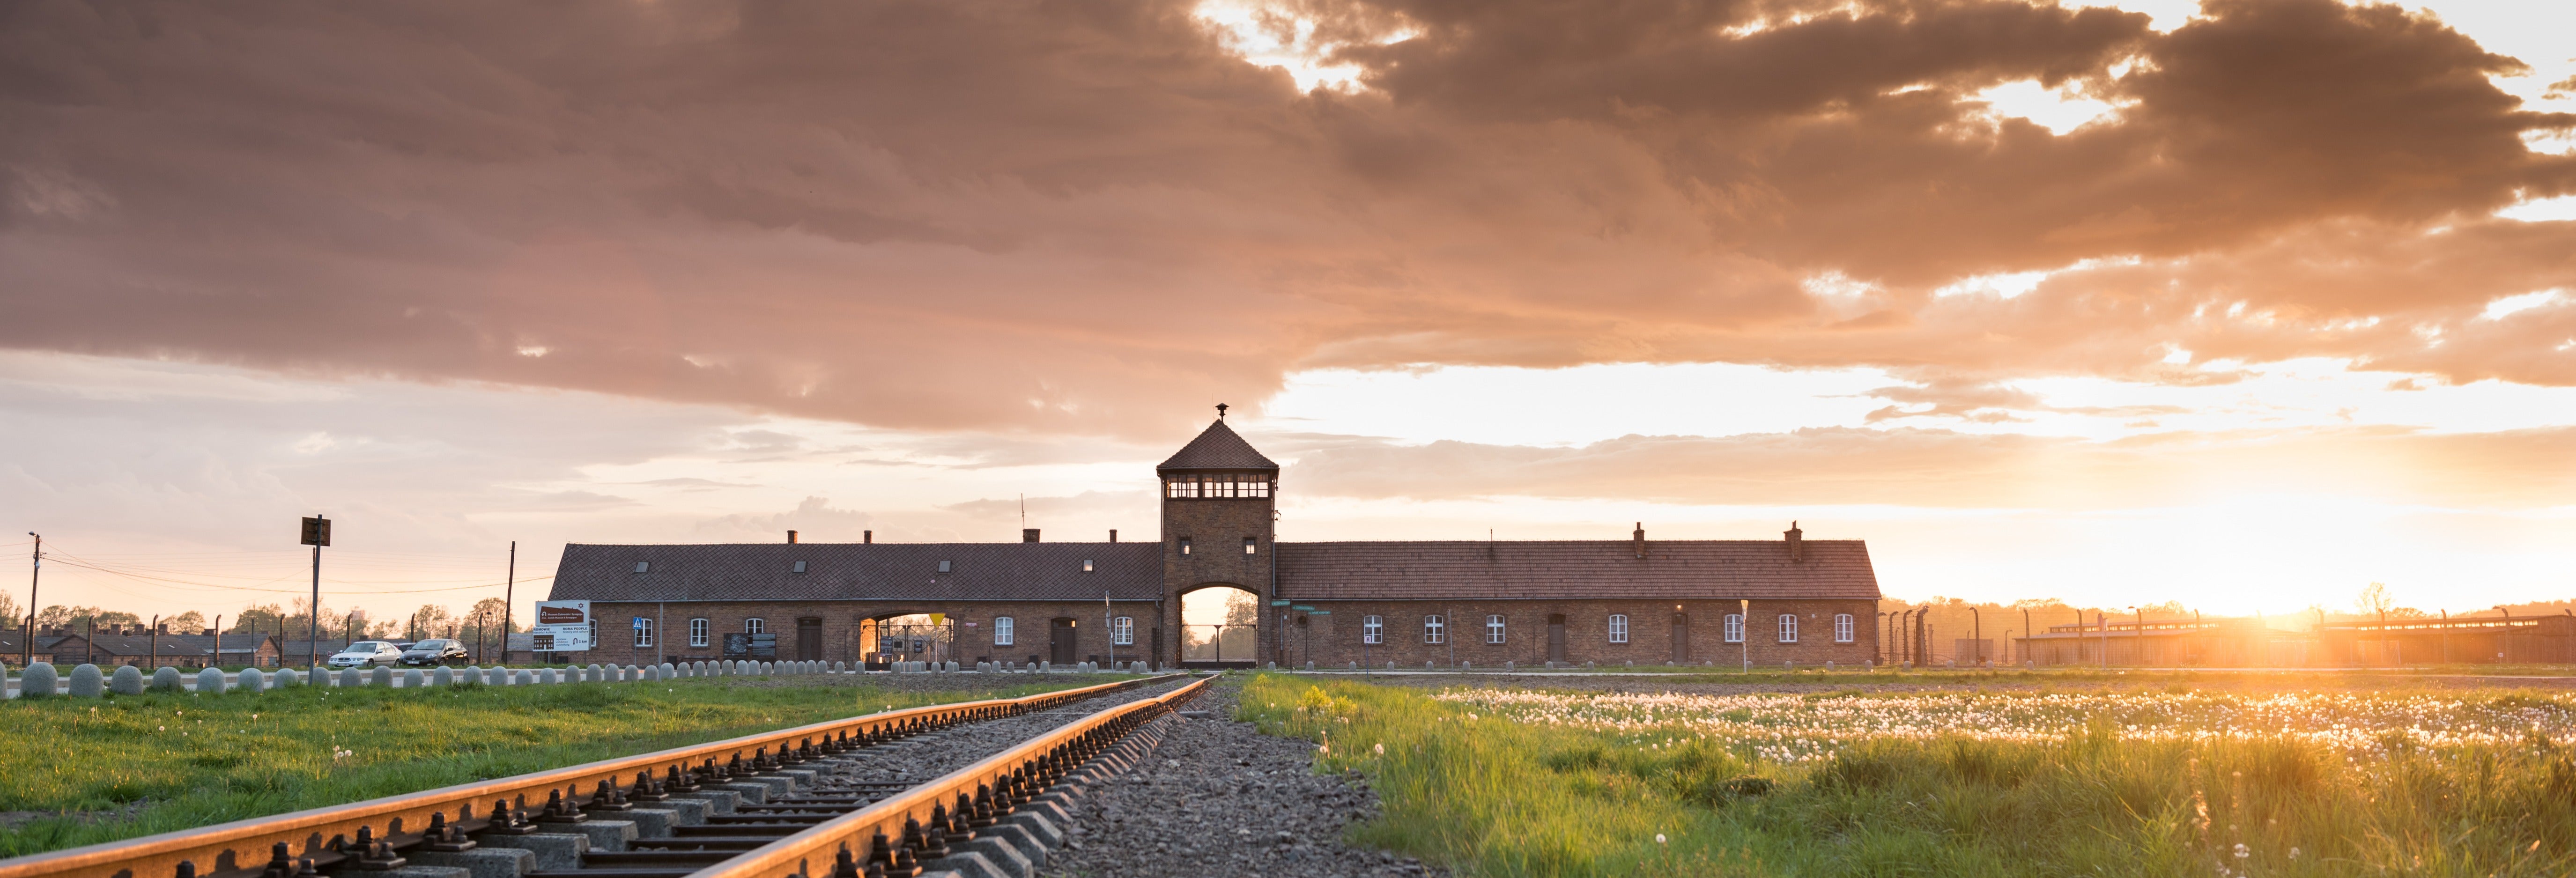 Excursión exprés a Auschwitz-Birkenau